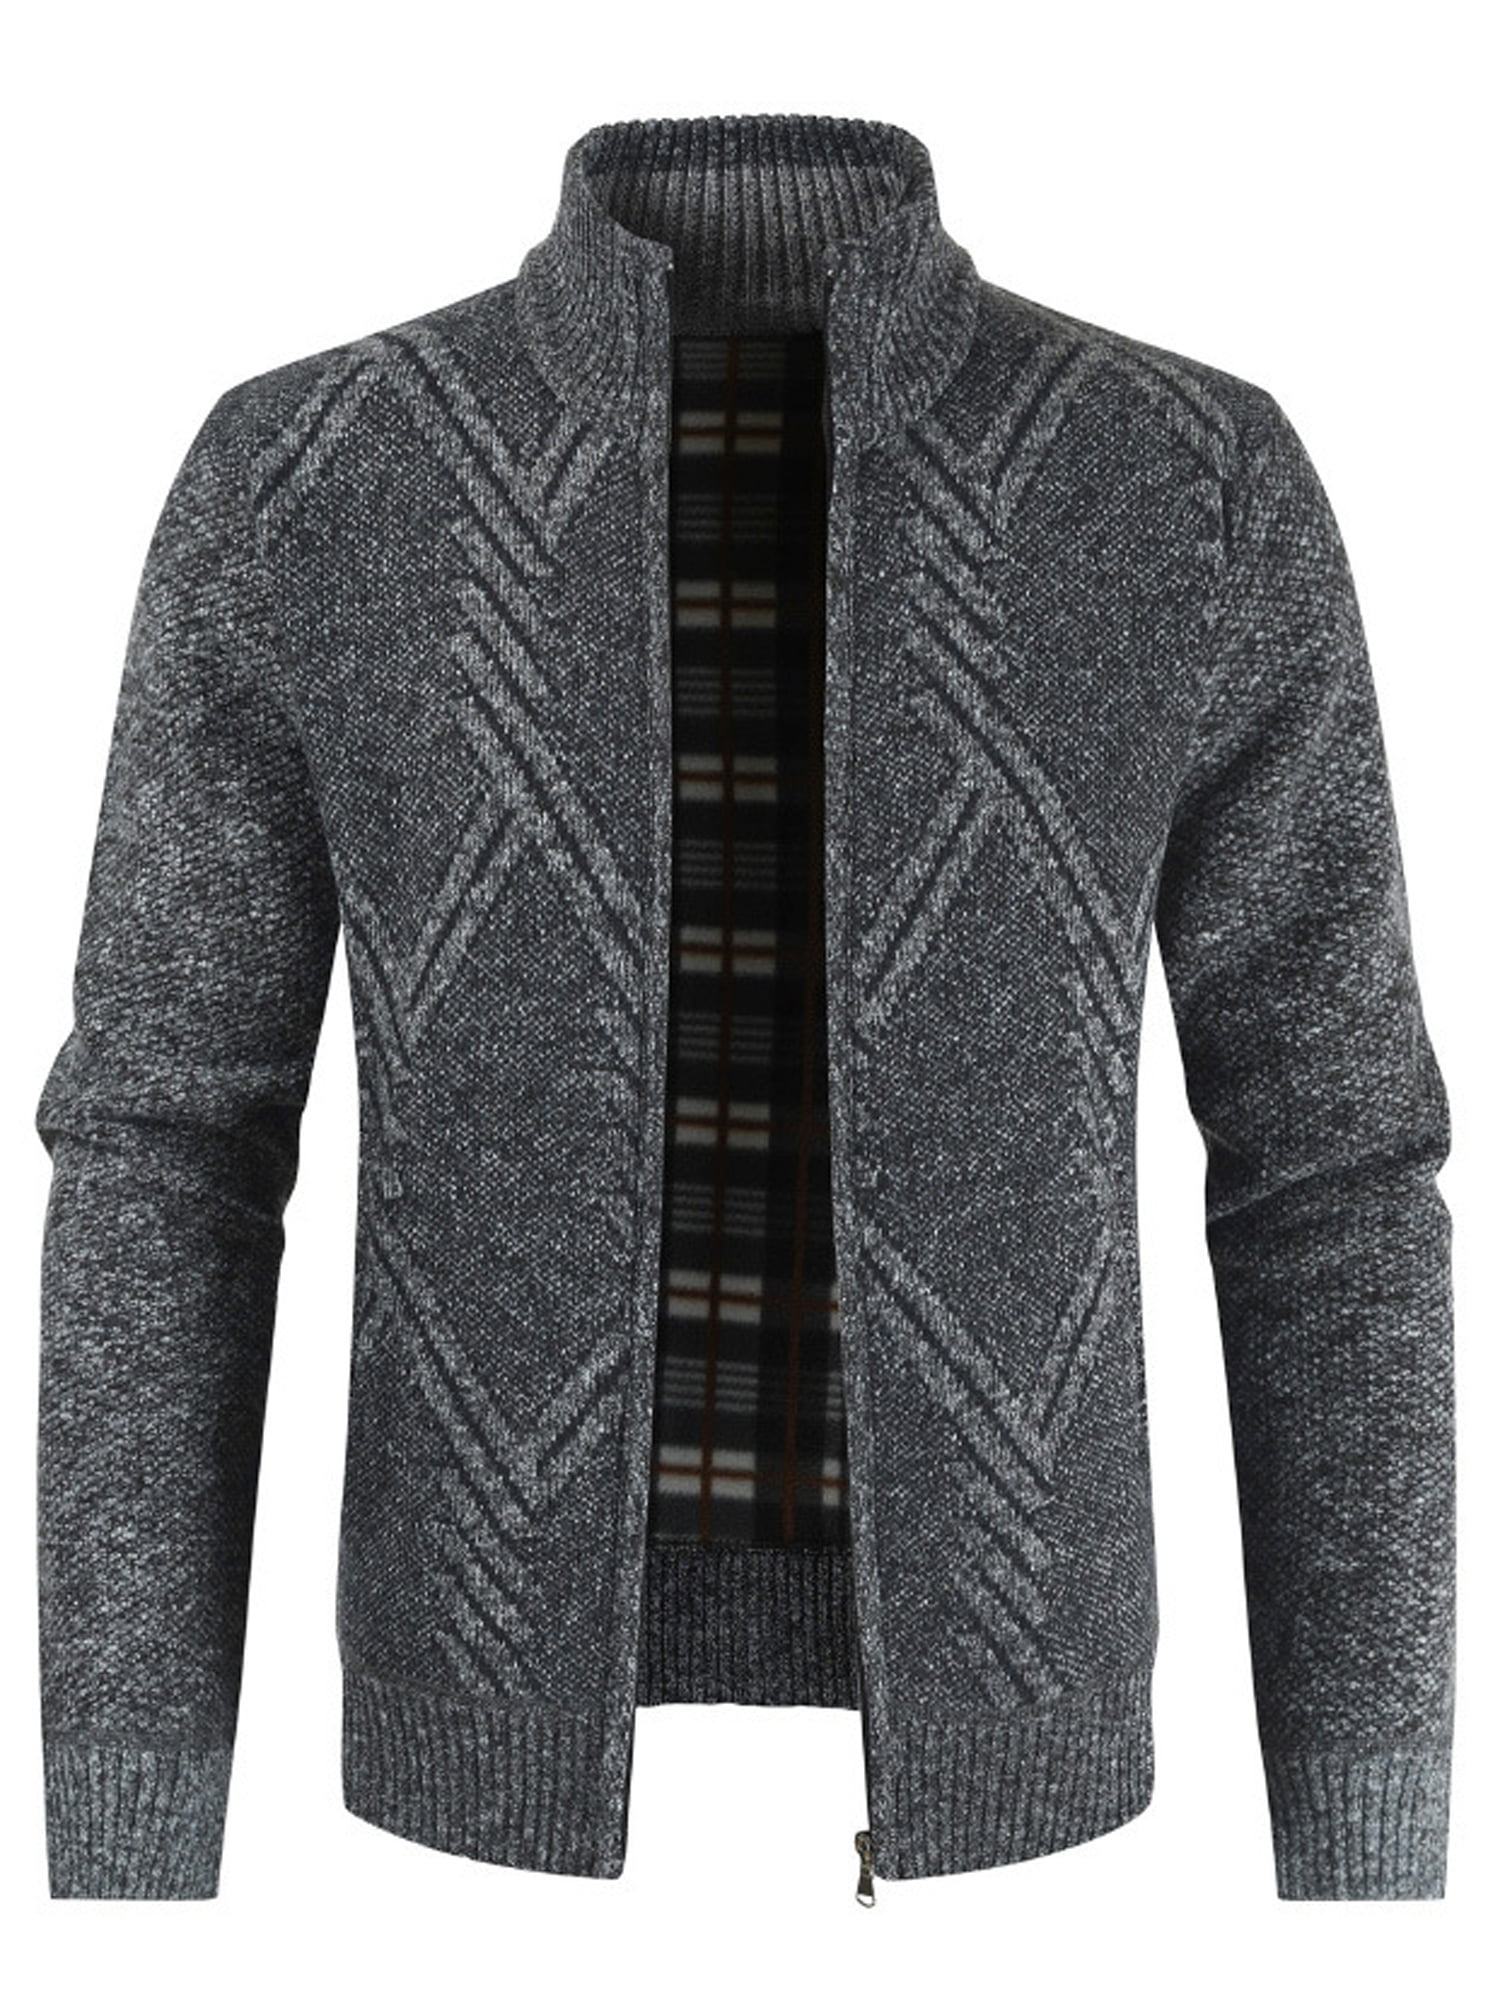 Men's Winter Cotton Knitted Zip Up Cardigan Jacket Long Sleeve Tops ...